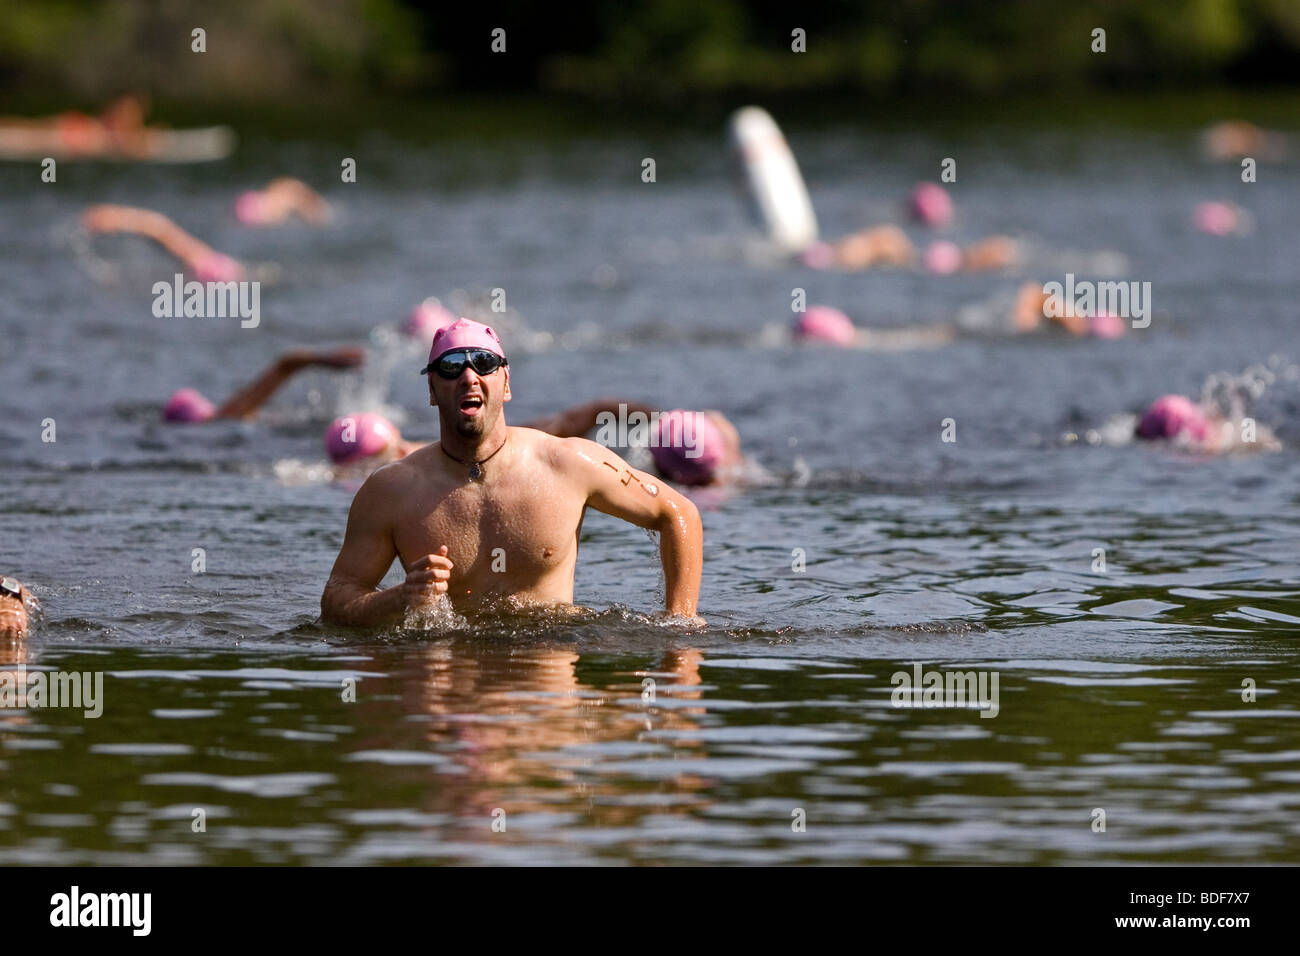 Triathlete leaves the water after the swim leg of an Xterra triathlon. Stock Photo